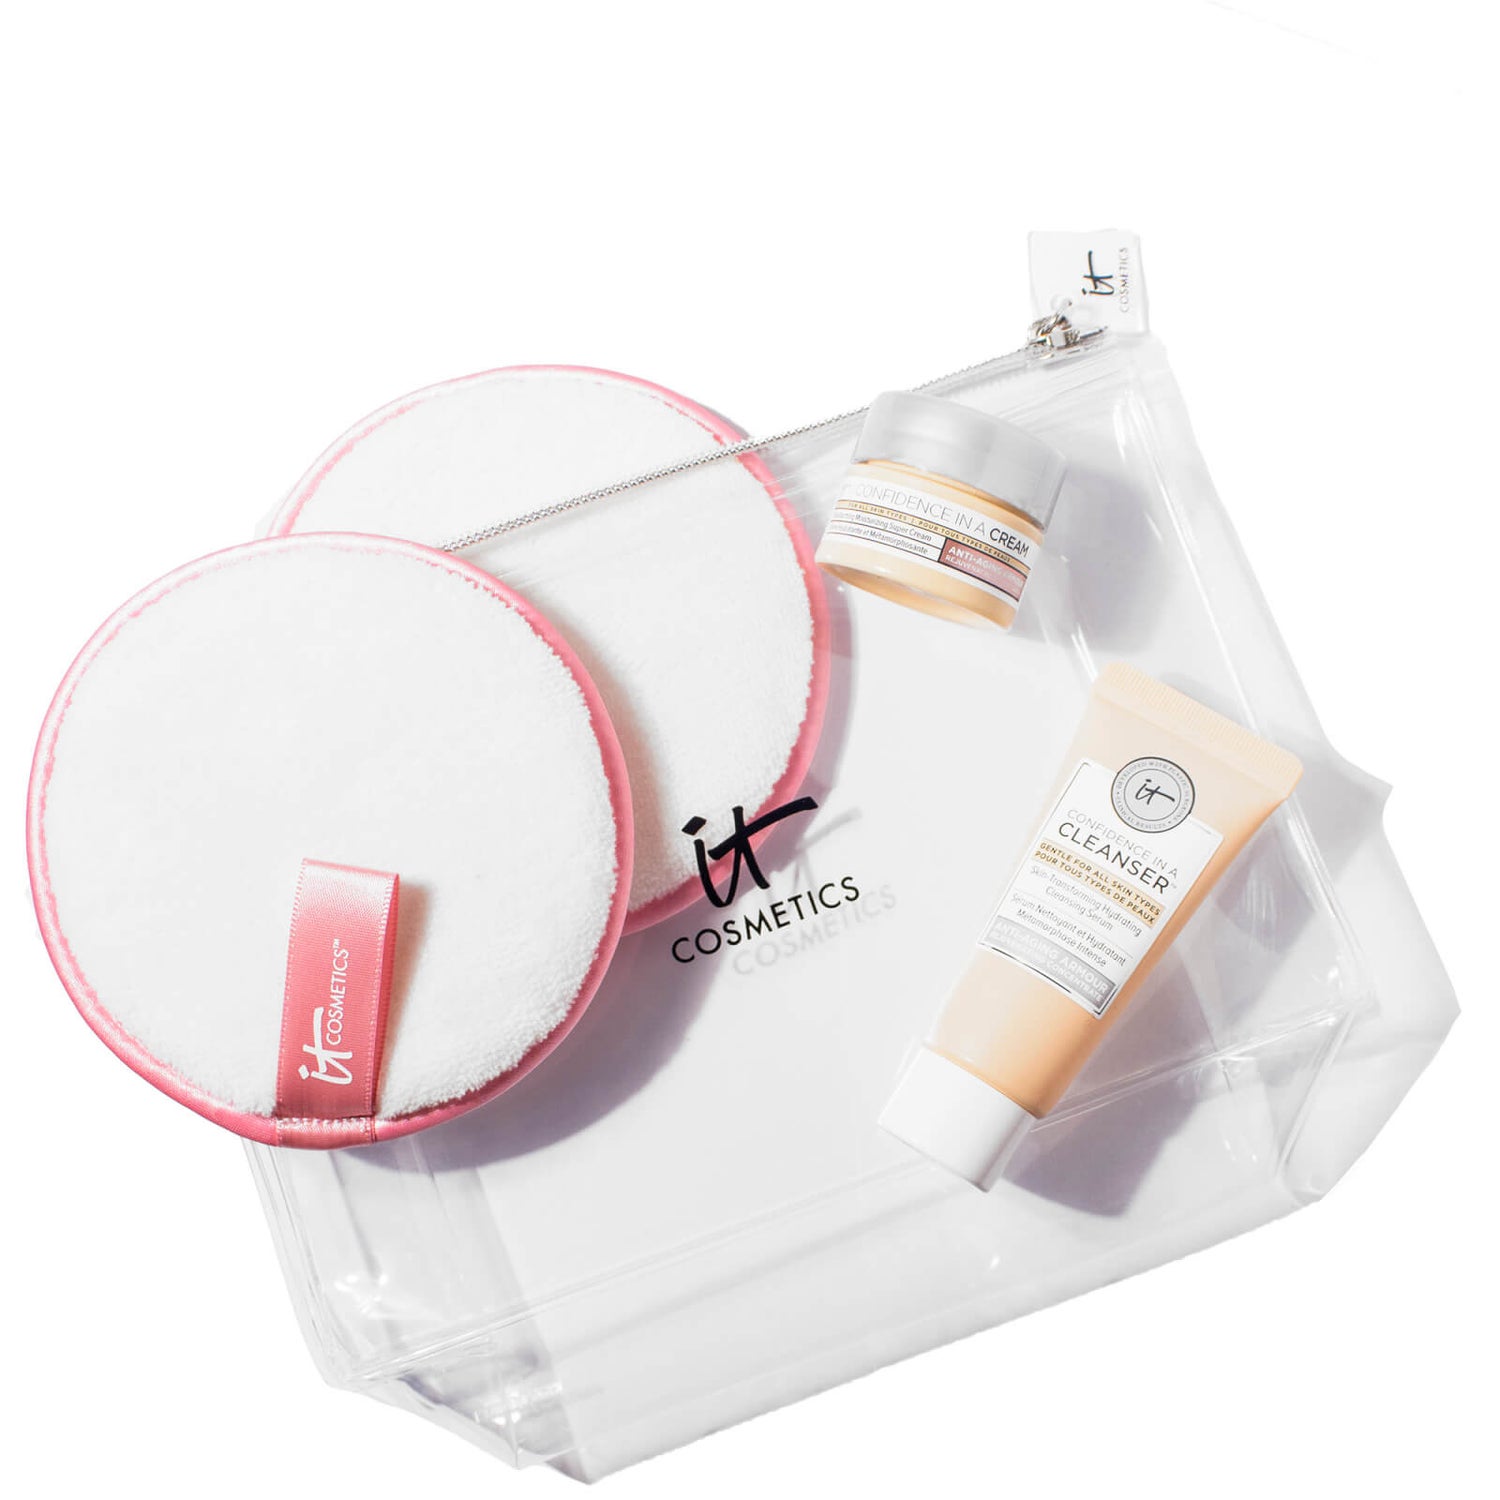 IT Cosmetics Confidense Cleanse Kit